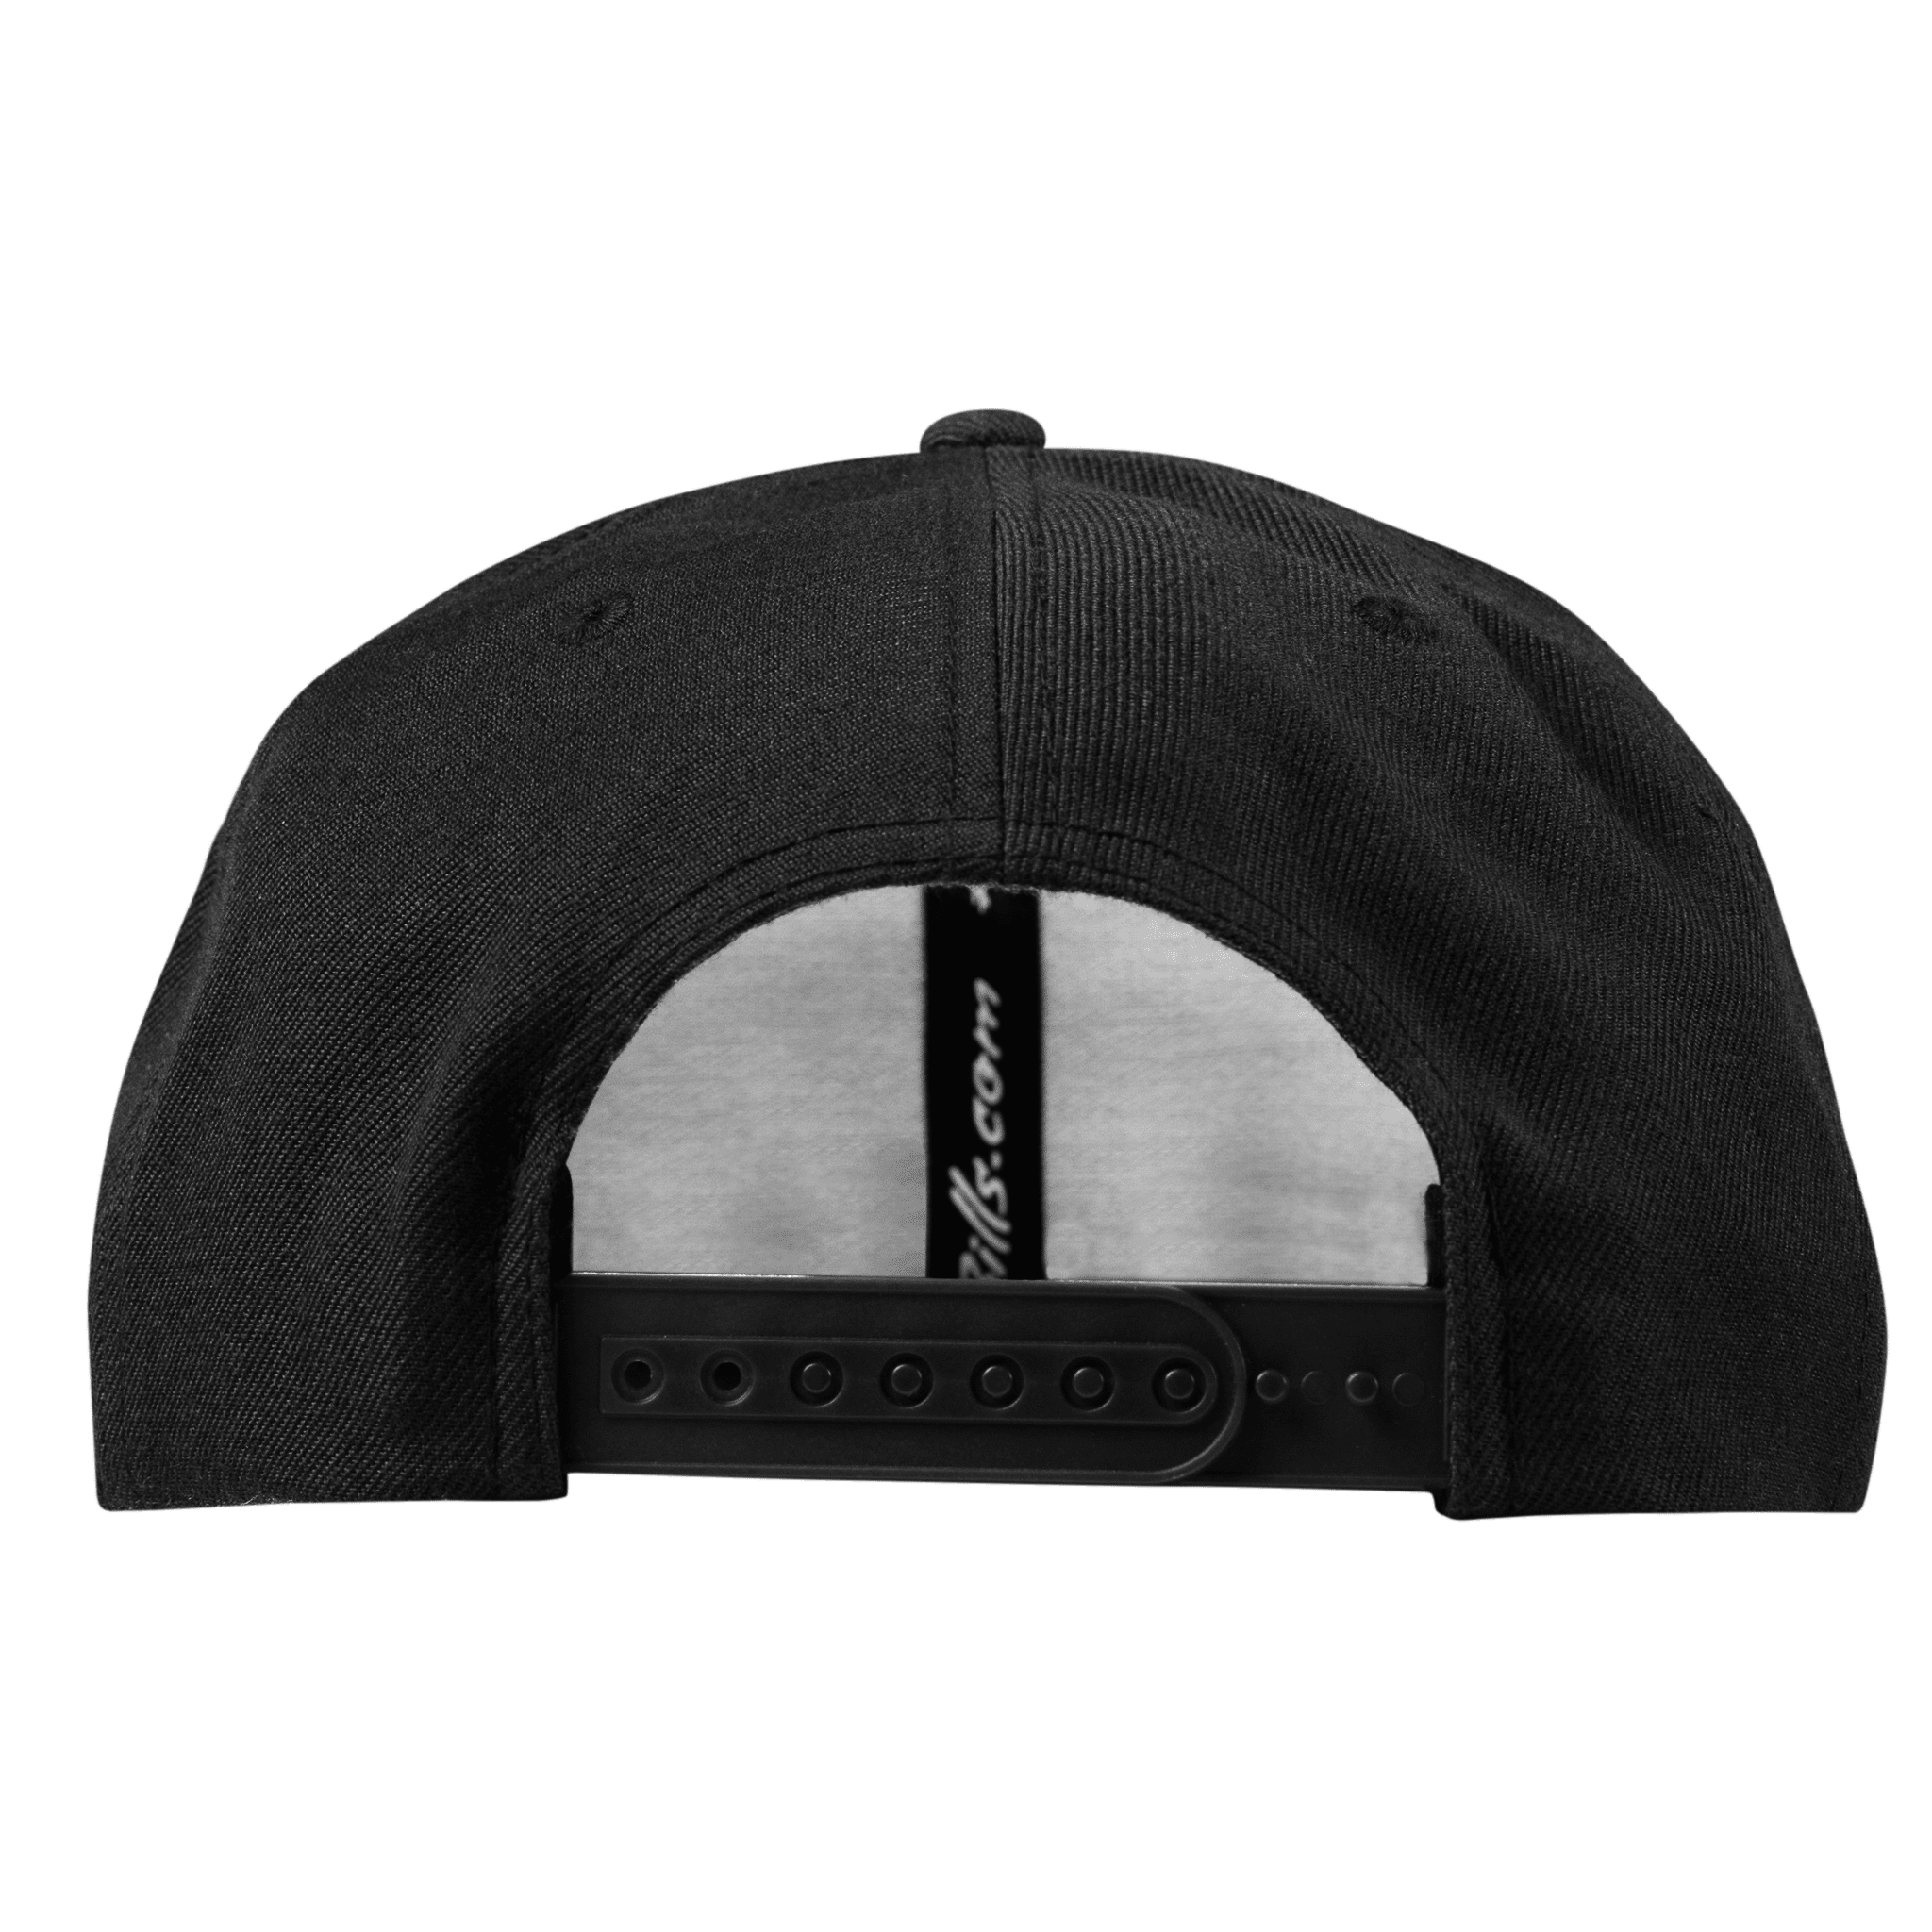 Black Snapback Hat | New Jersey